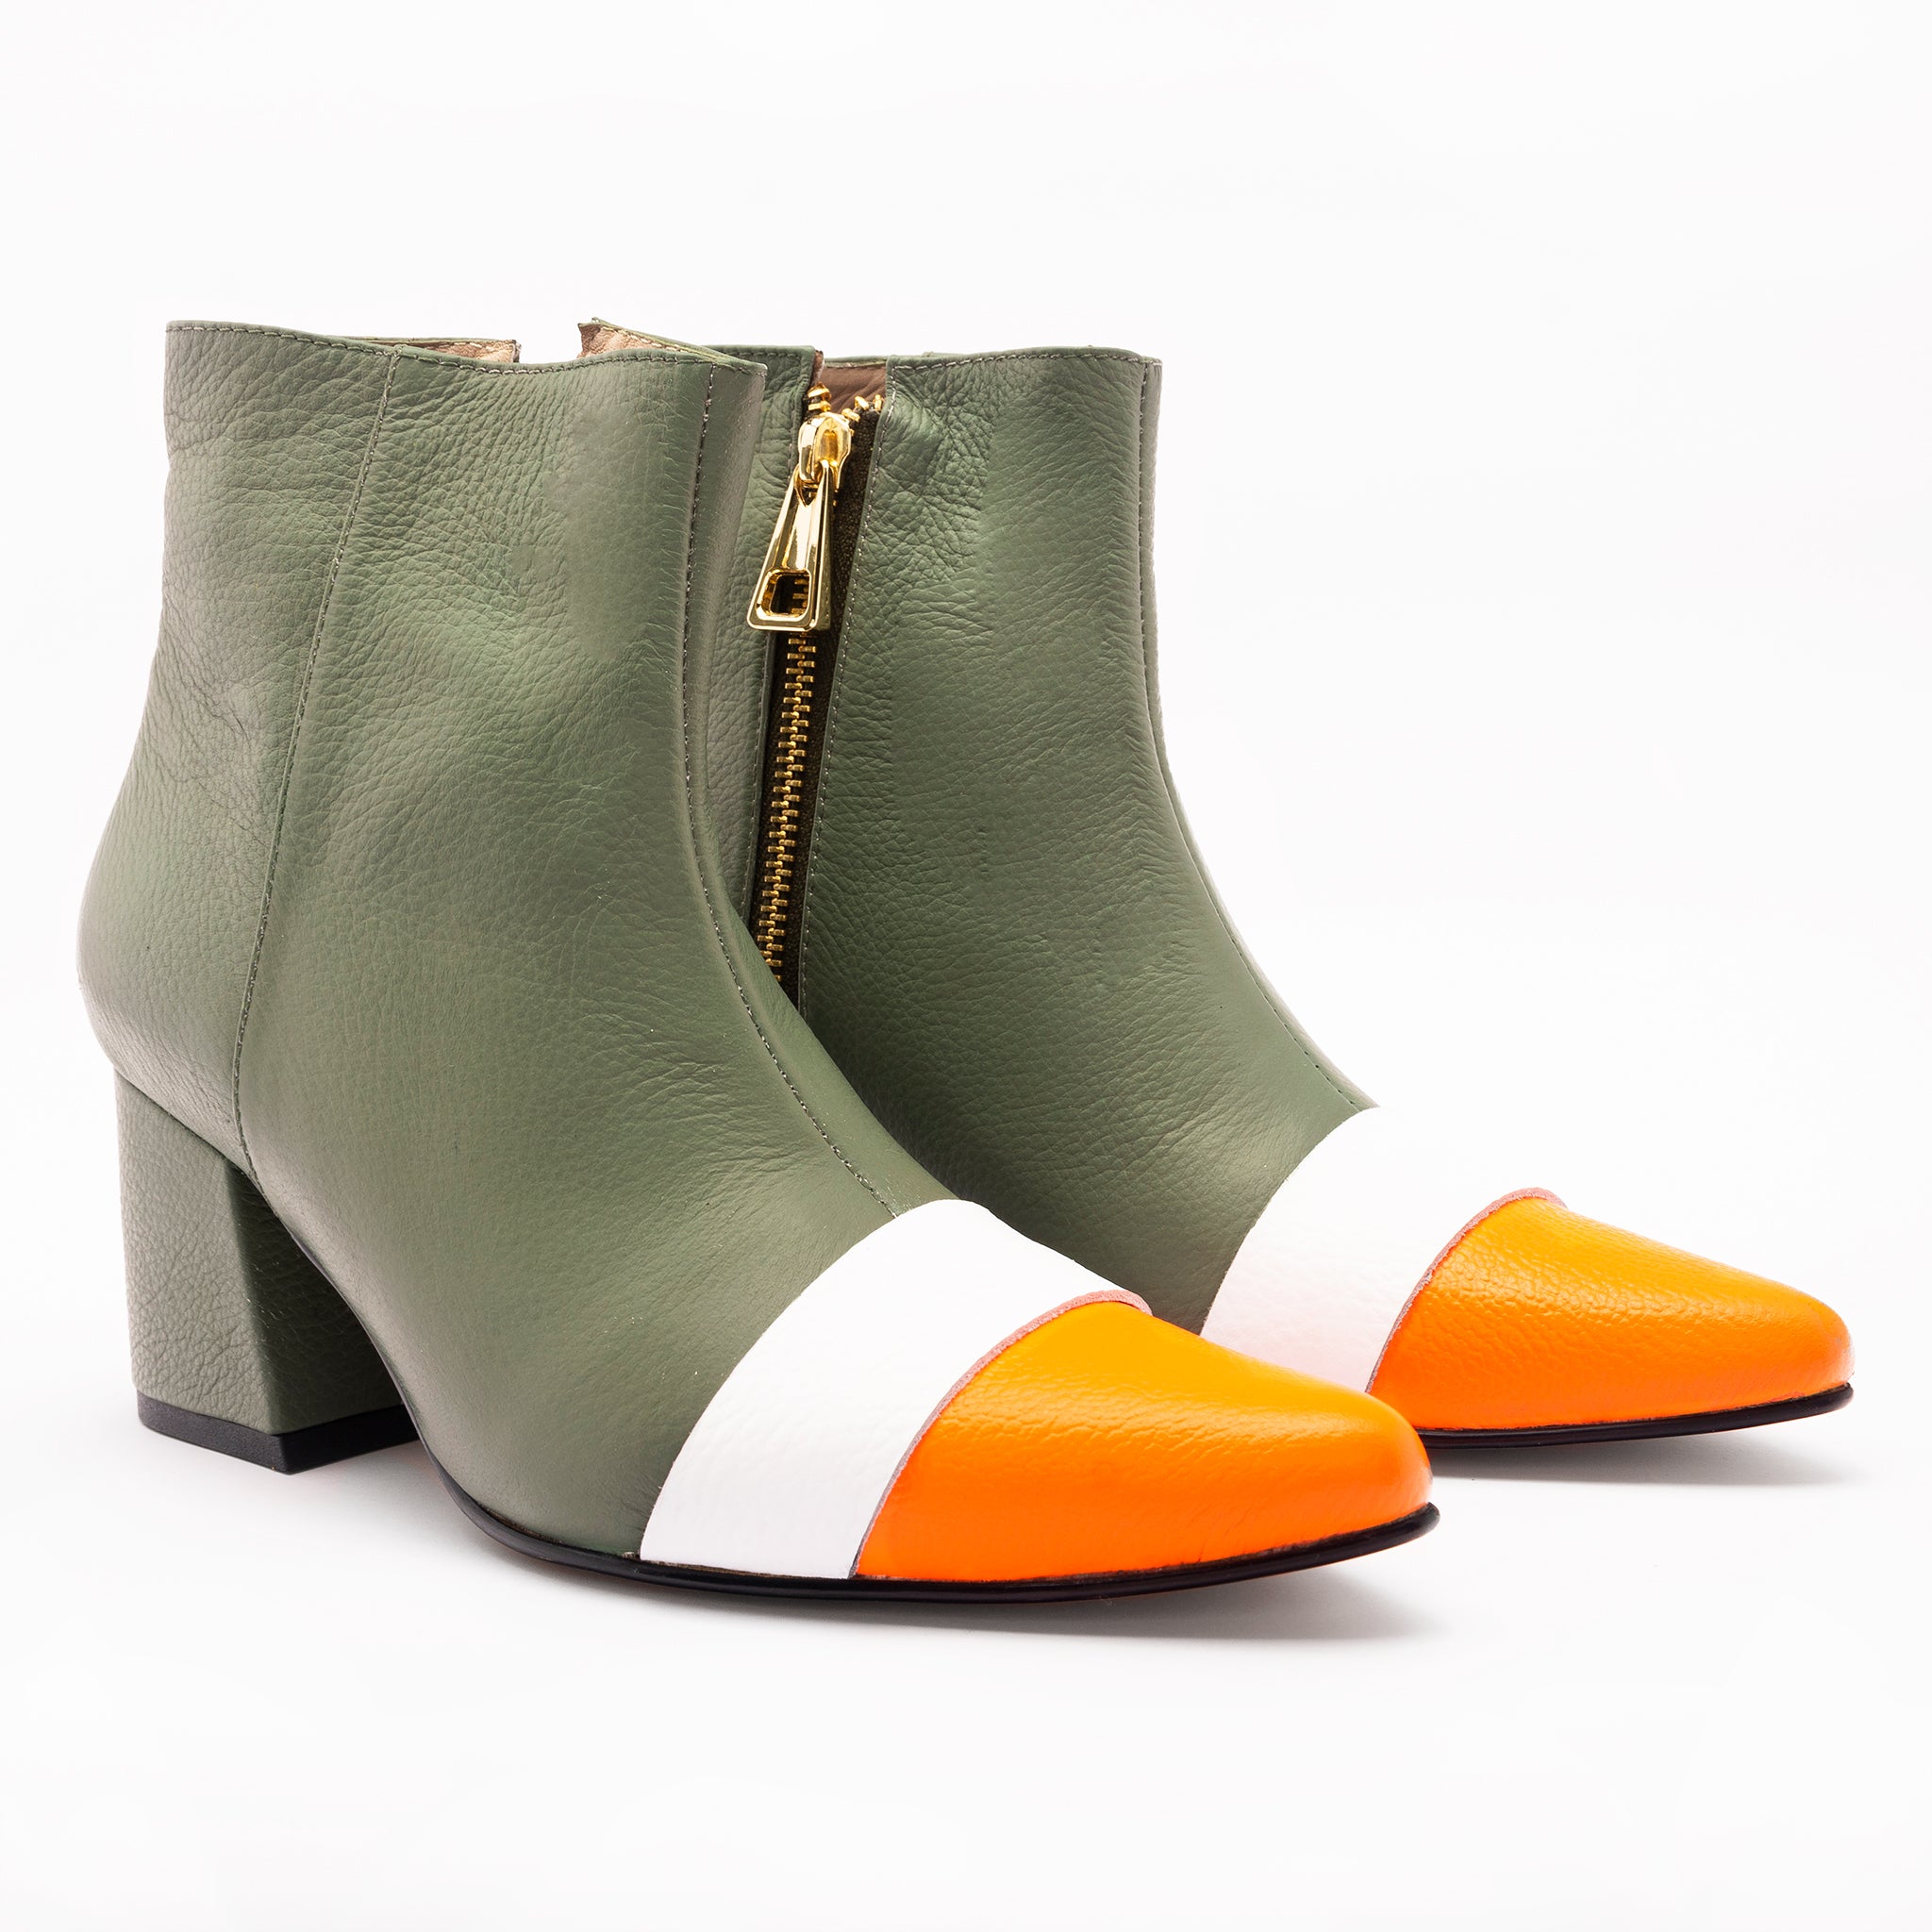 ANKLE boots - SALVIA + naranja NEÓN + blanco - divinacastidad